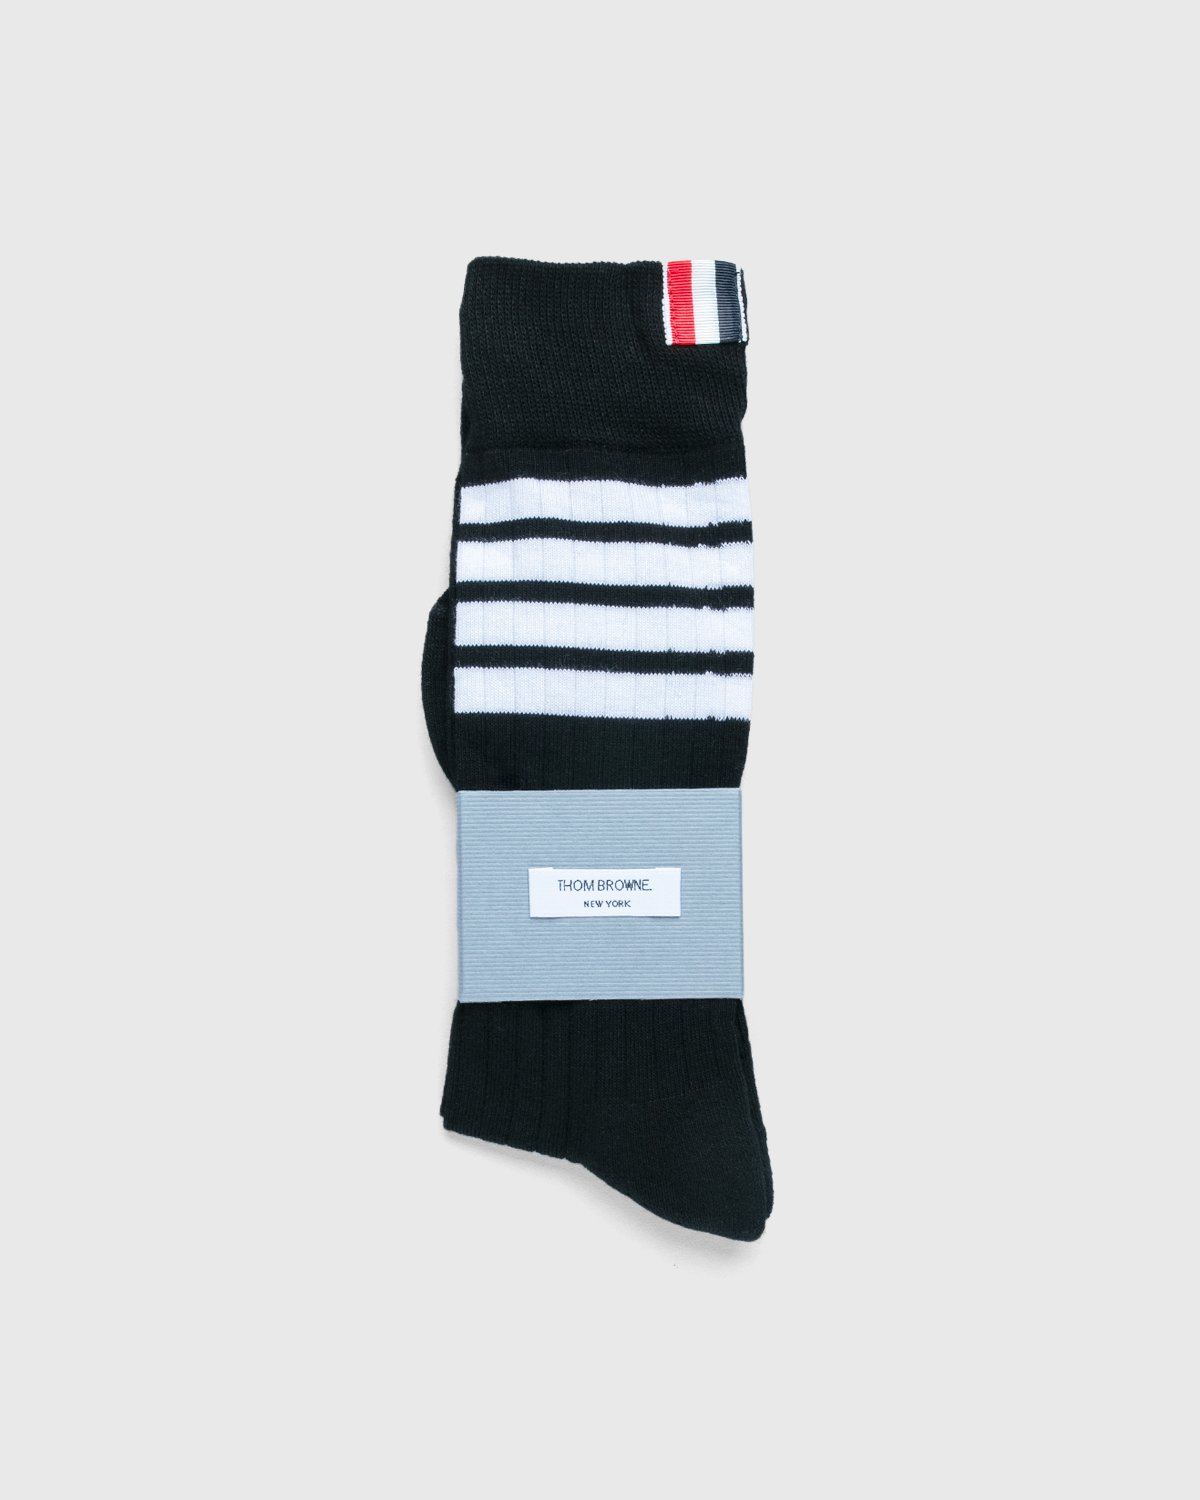 Thom Browne x Highsnobiety - Men's Mid-Calf Socks Grey - Accessories - Grey - Image 1